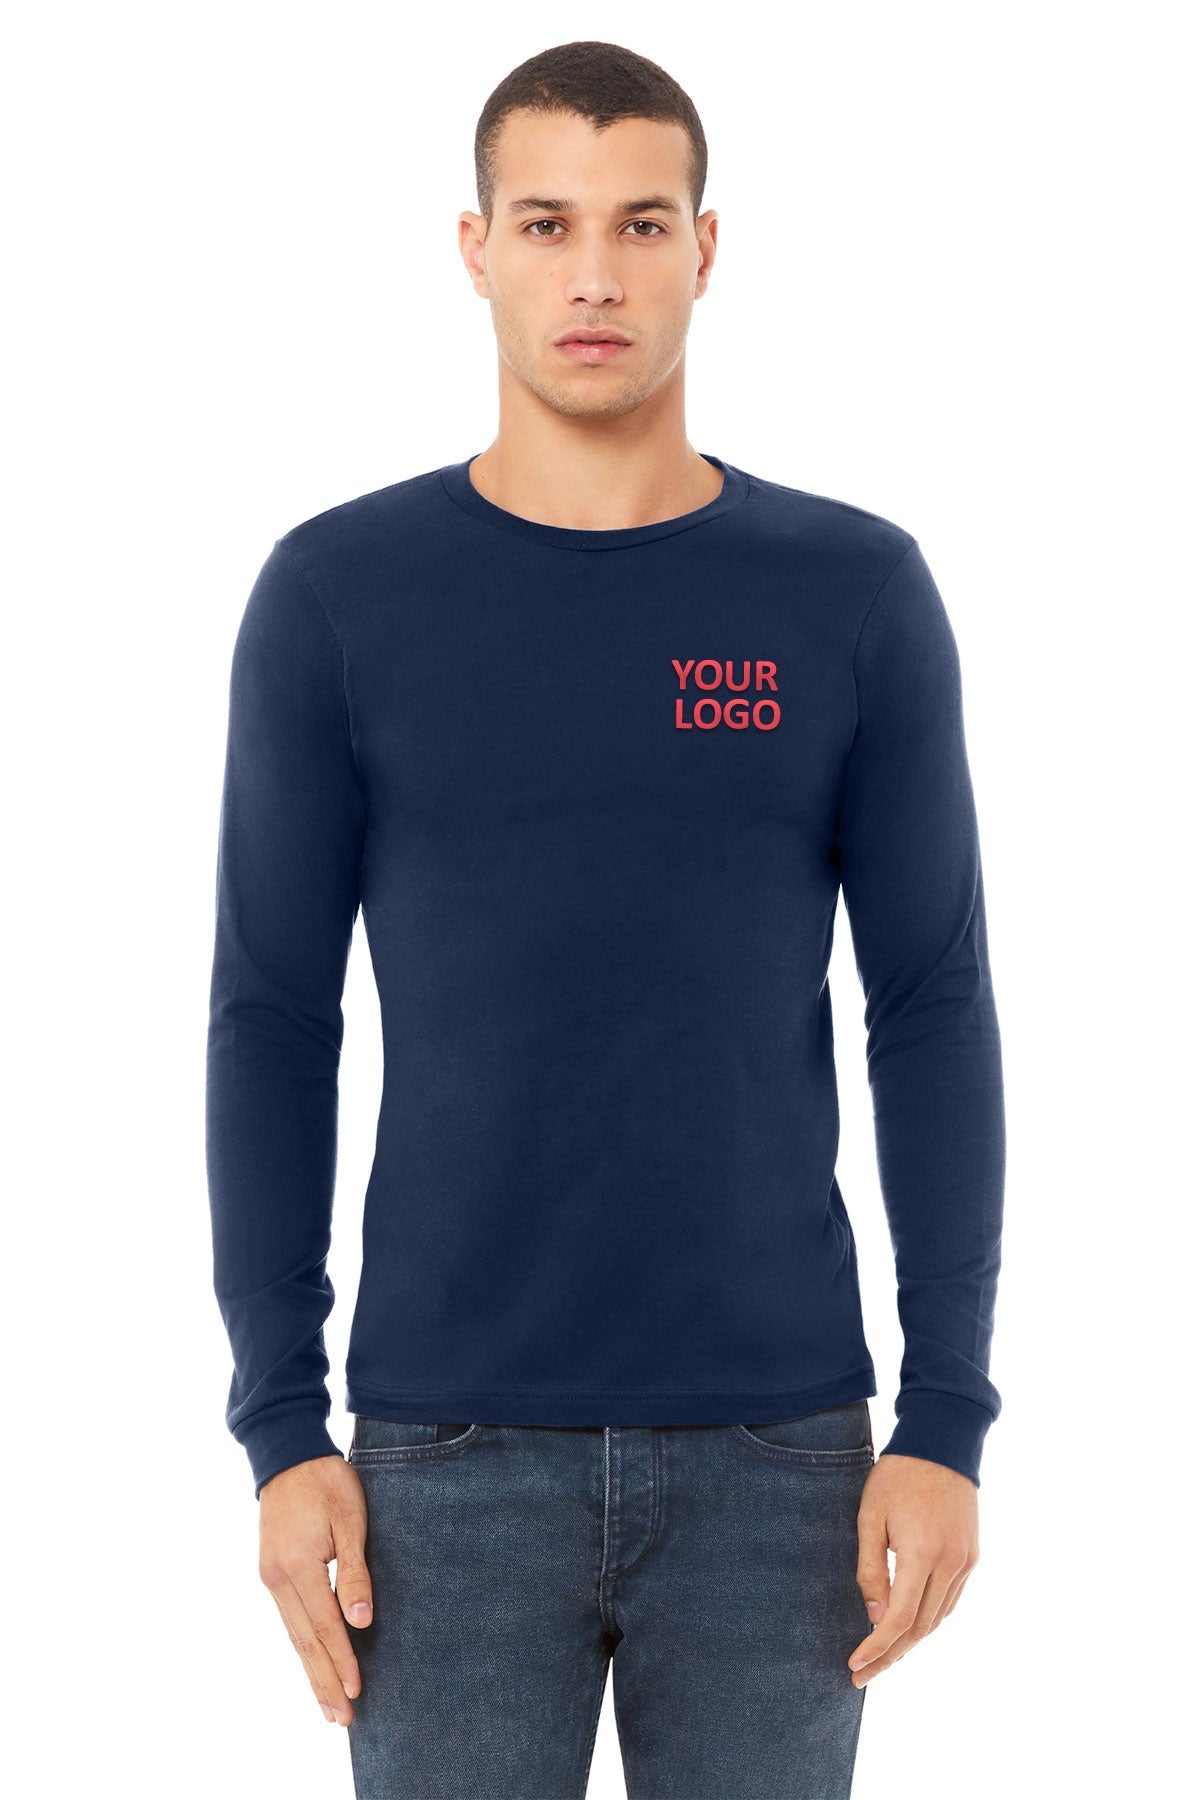 bella + canvas unisex jersey long sleeve t-shirt 3501 navy